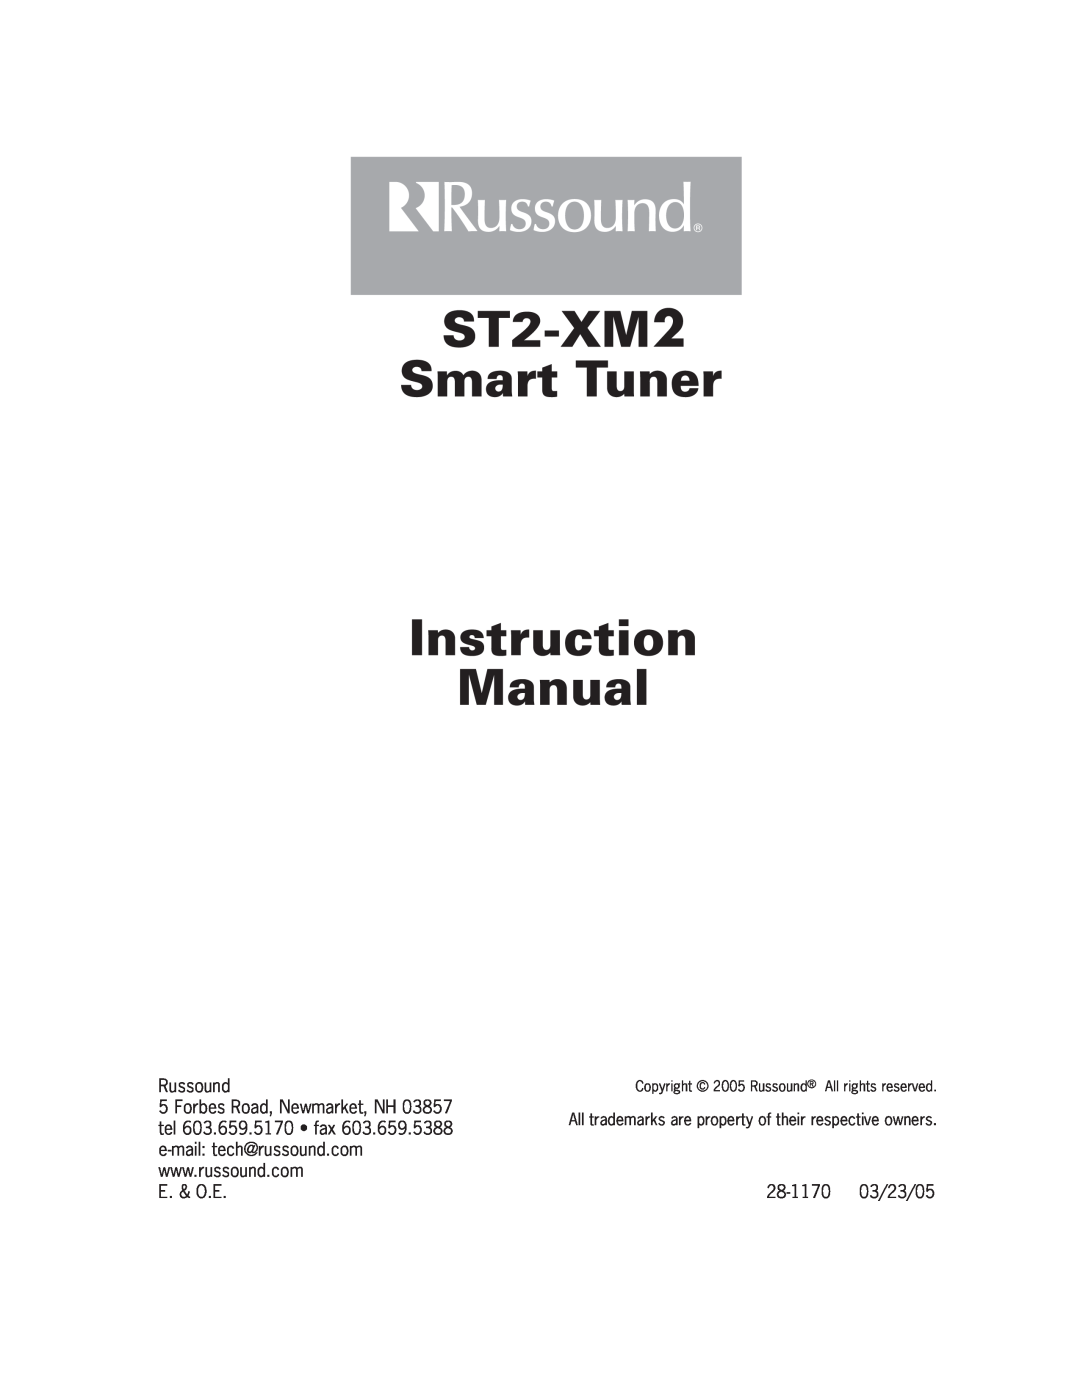 Russound ST2-XM2 manual E. & O.E, 28-117003/23/05, Copyright 2005 Russound All rights reserved 